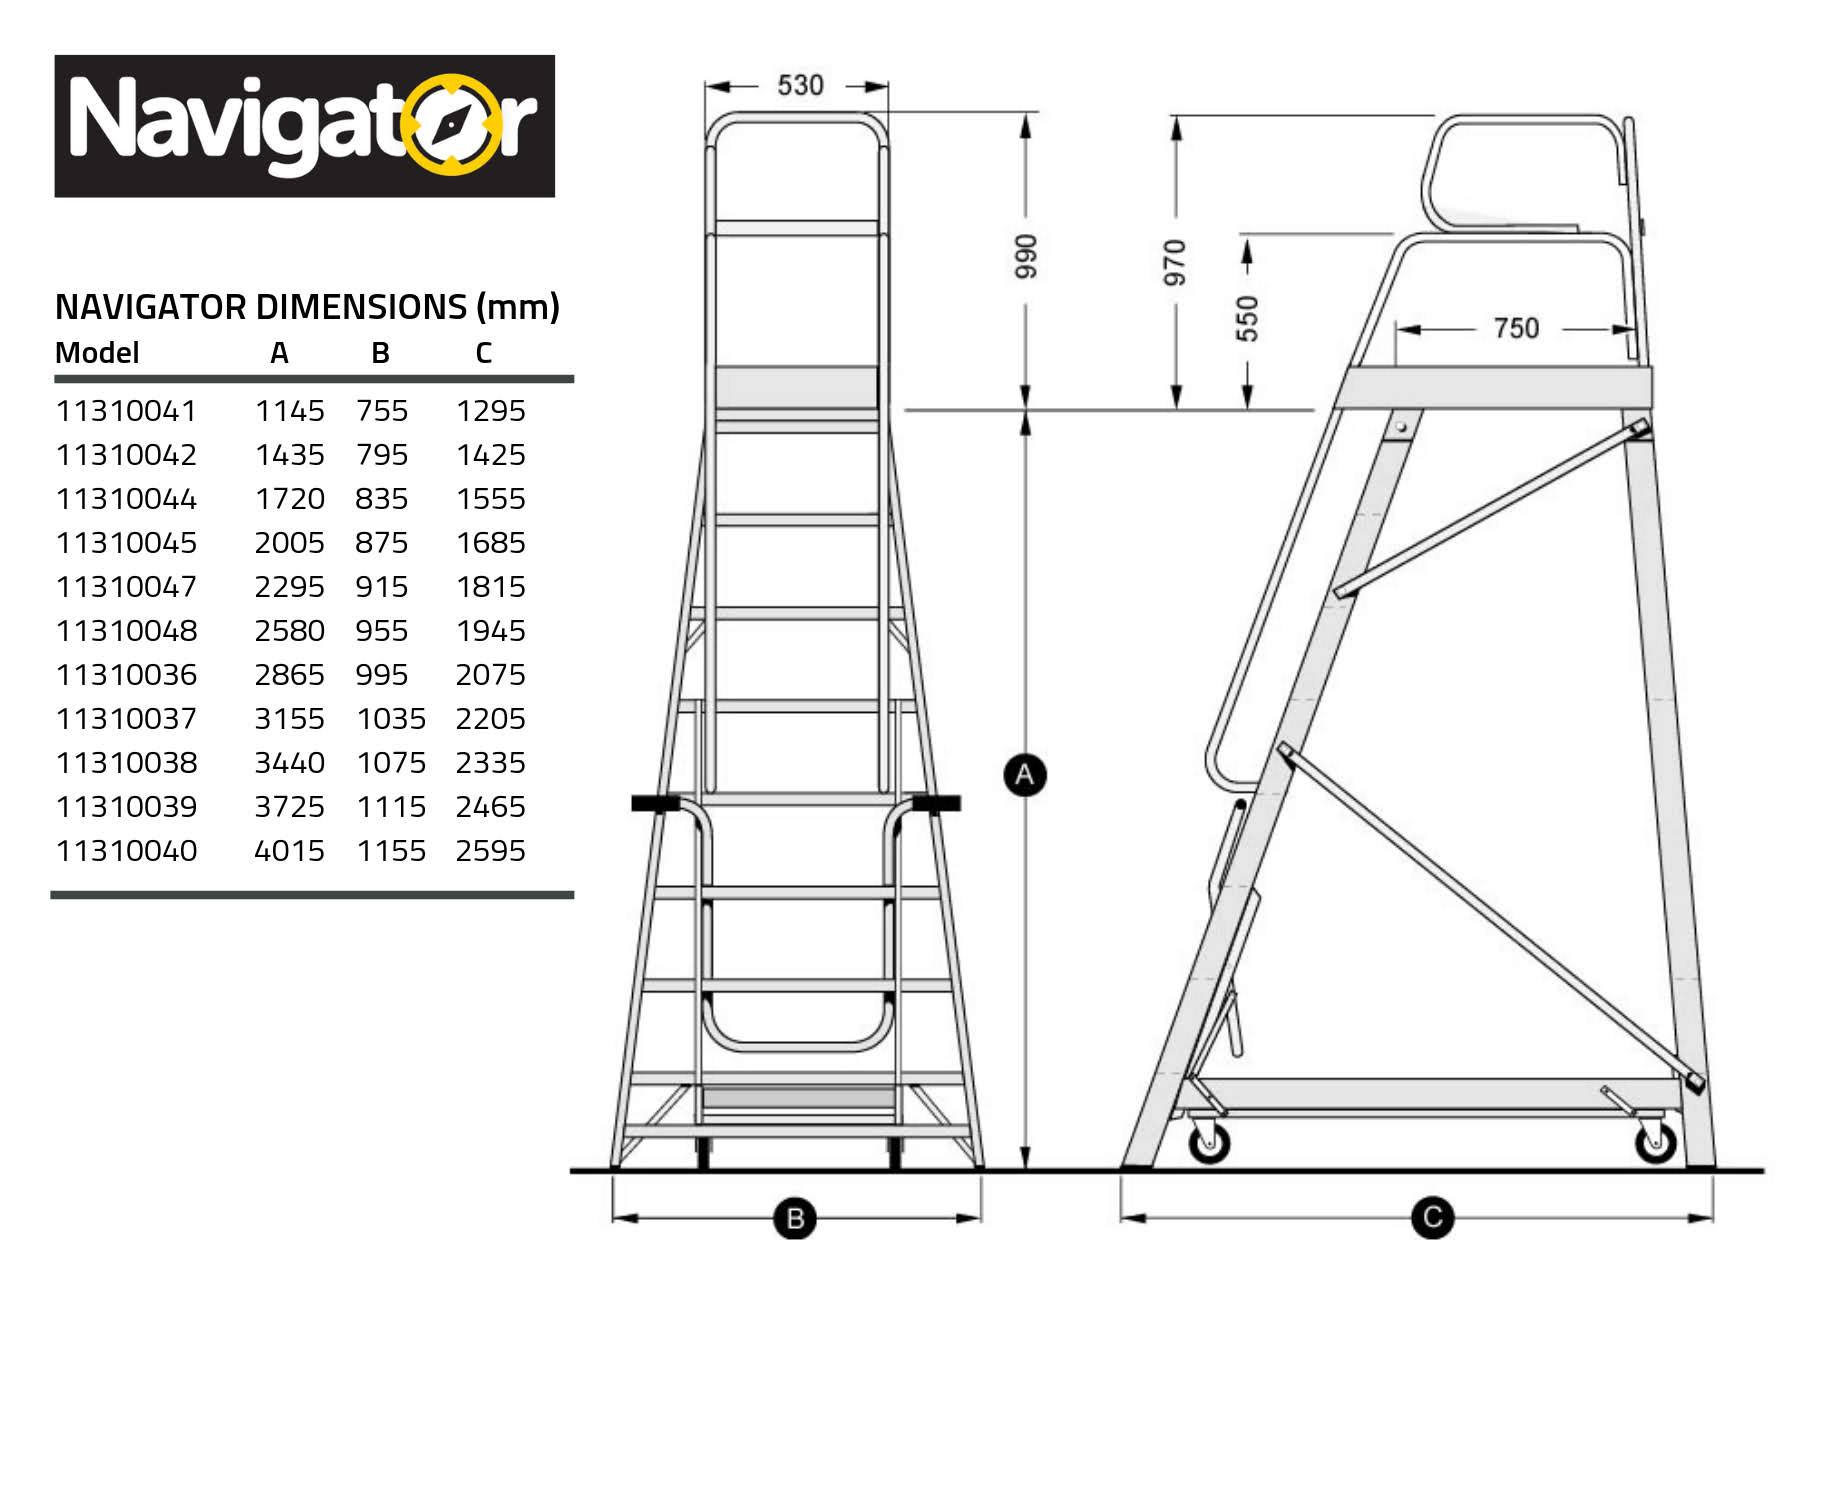 Navigator Mobile Warehouse Ladder